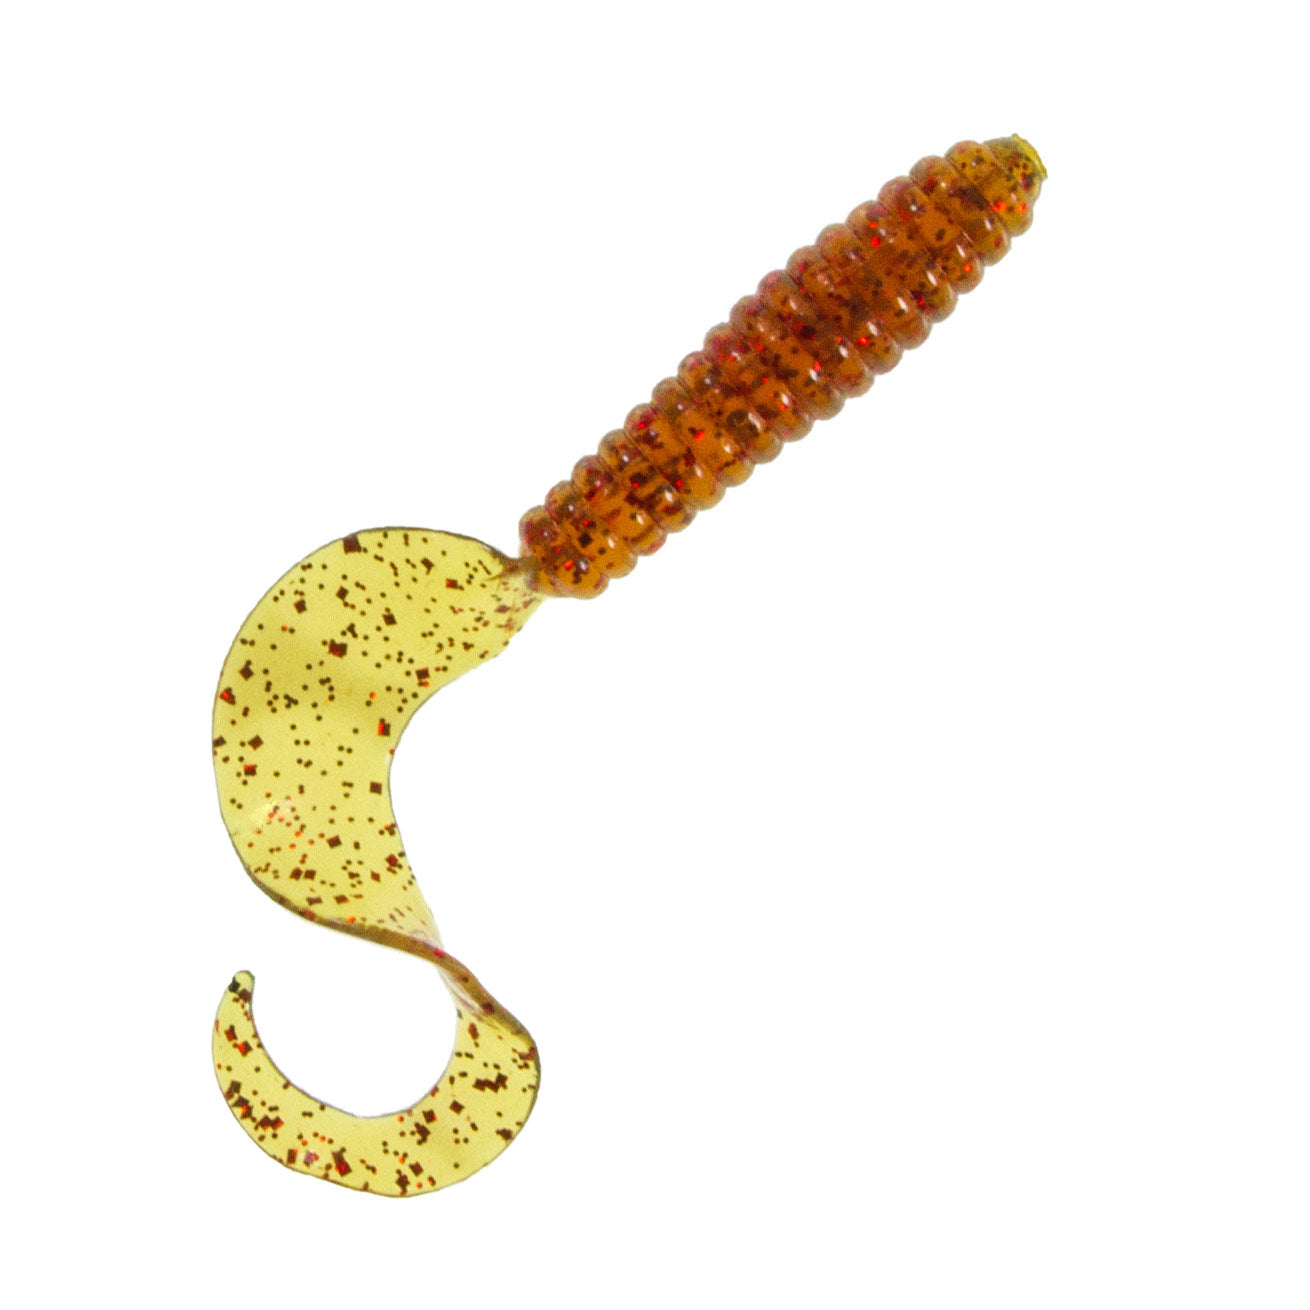 Curly Tail Grub Worm Mixed Soft Plastics Lure Fishing Tackle Bait Jig Head  50mm